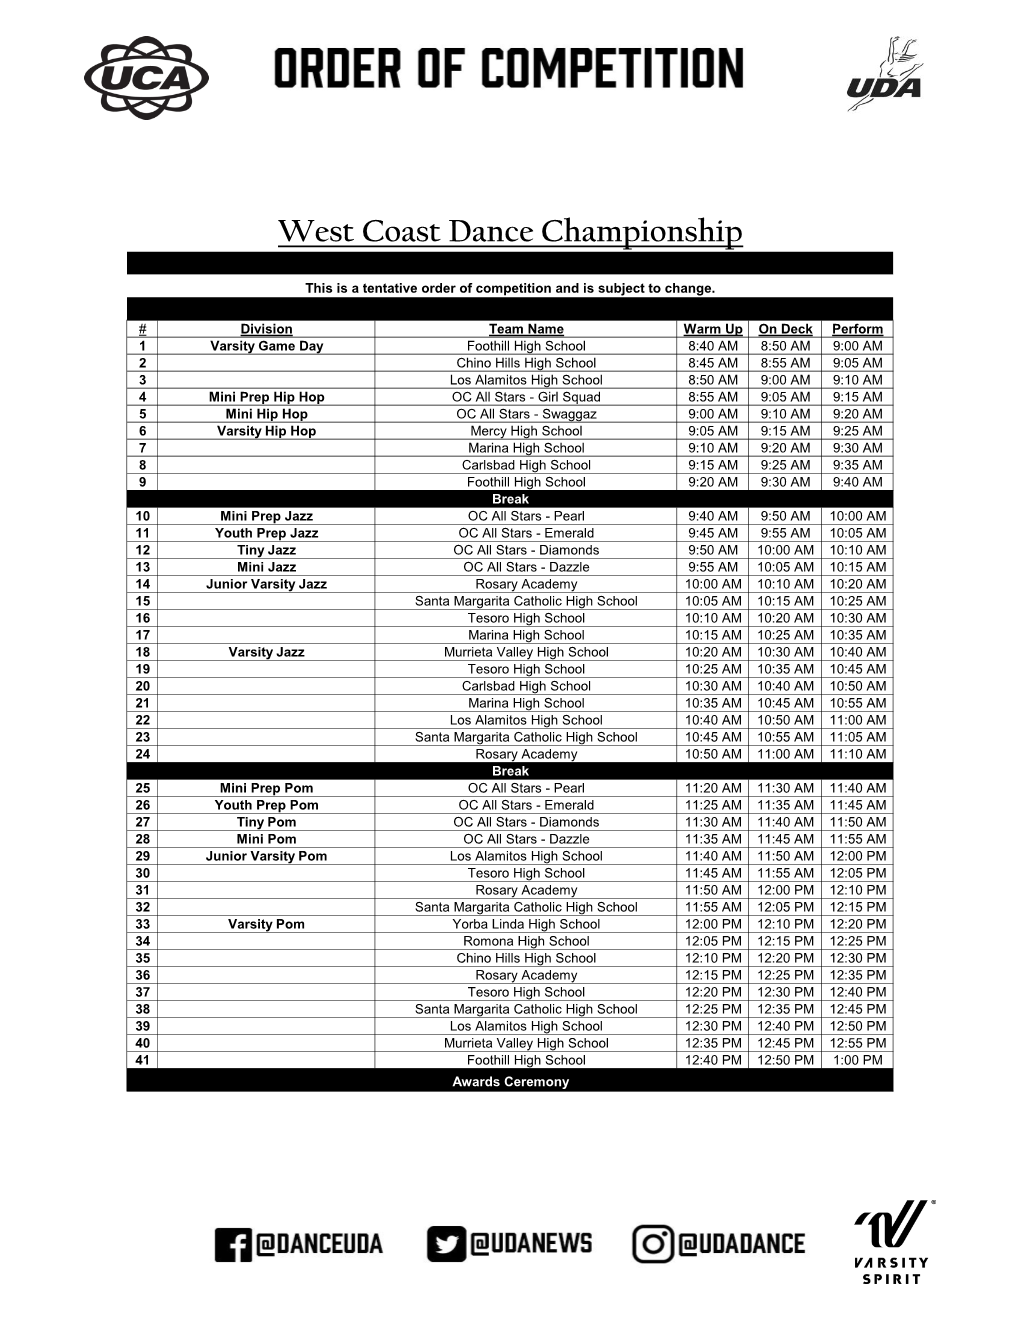 West Coast Dance Championship